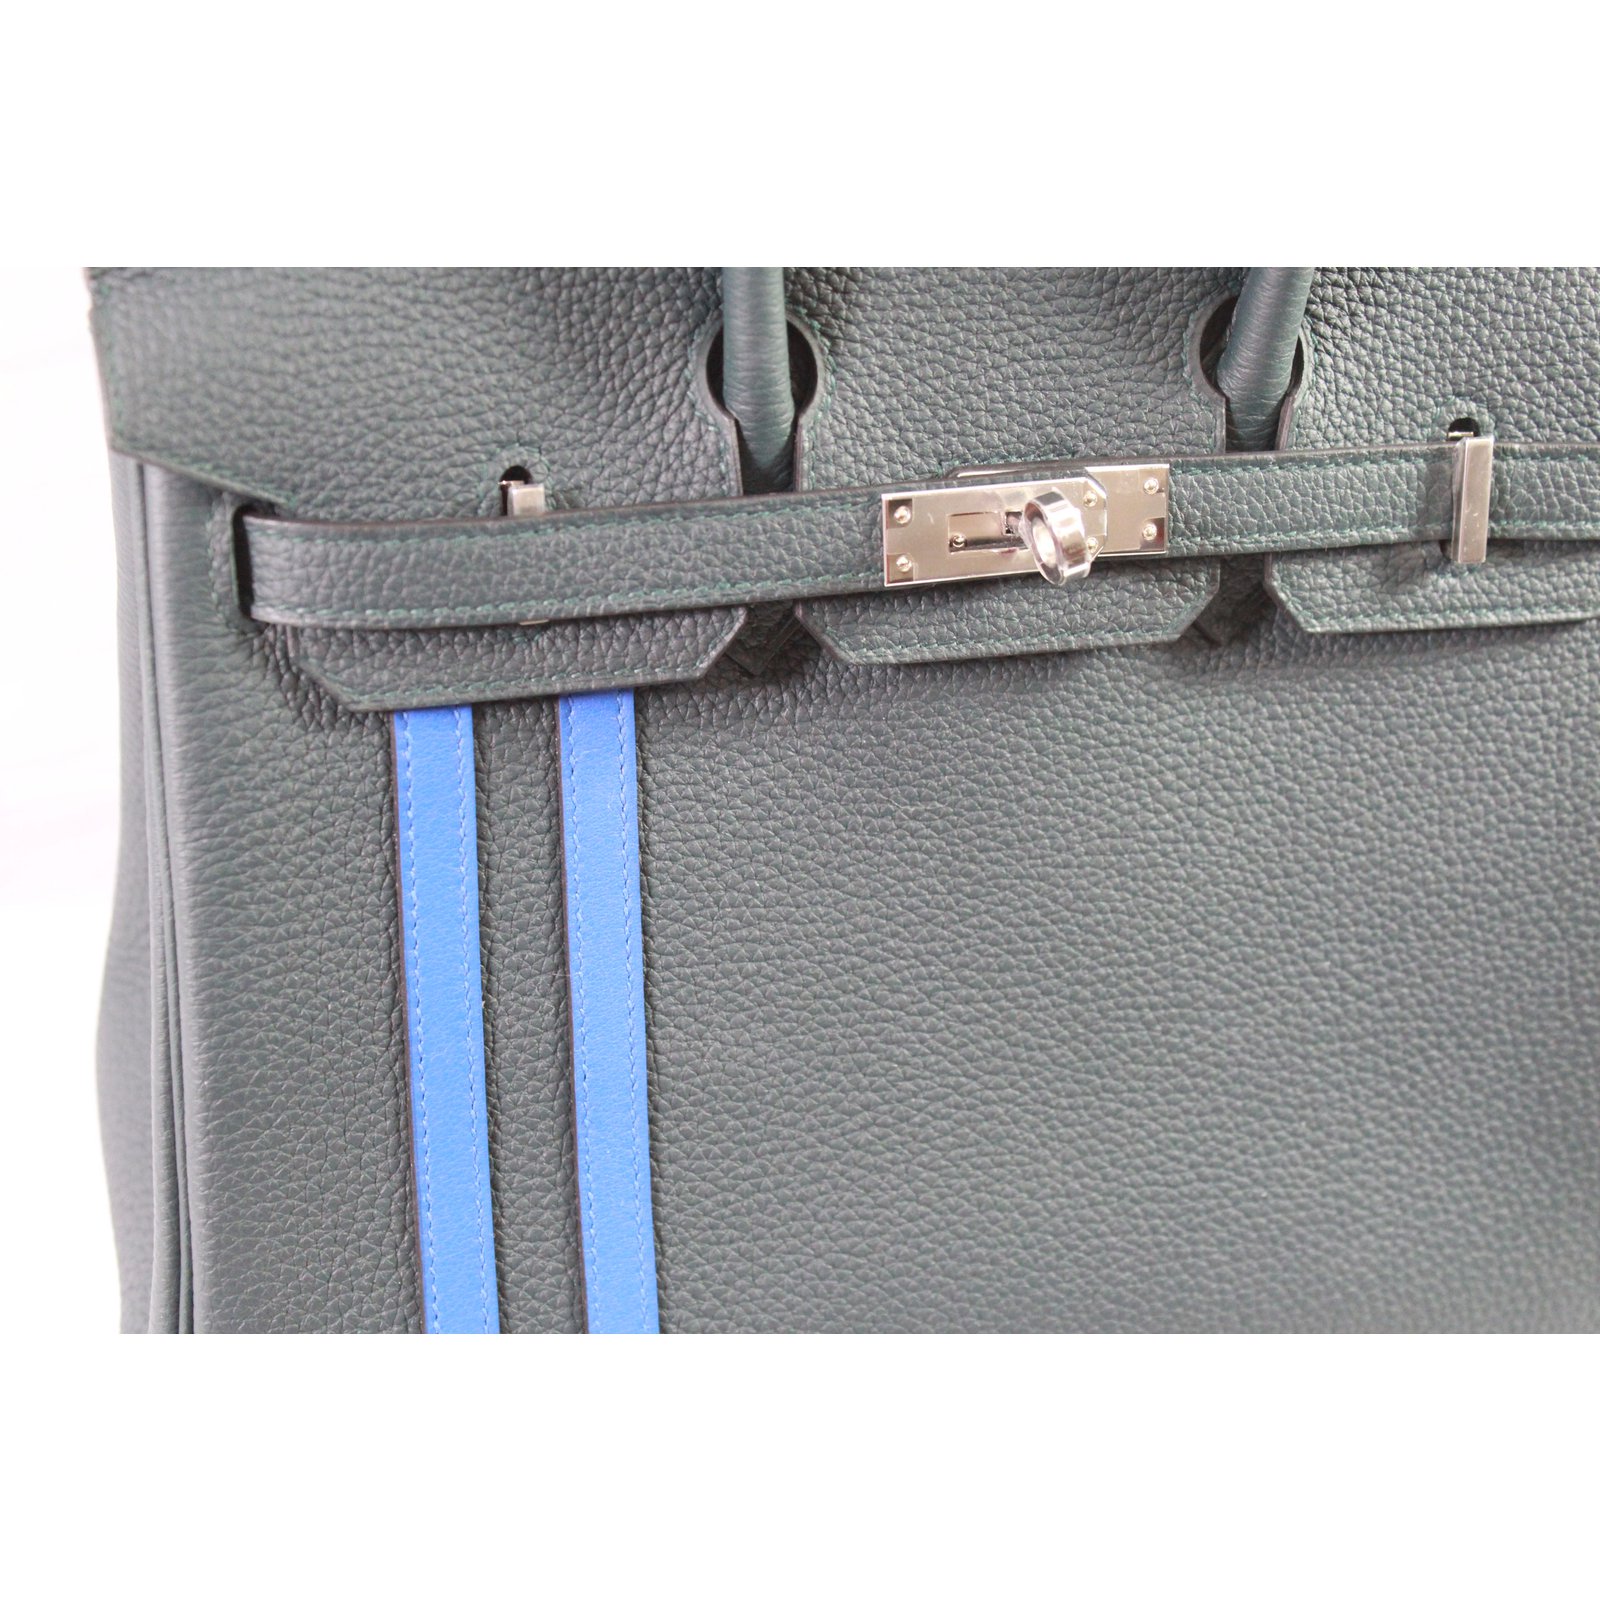 Birkin 25 leather handbag Hermès Green in Leather - 36952723